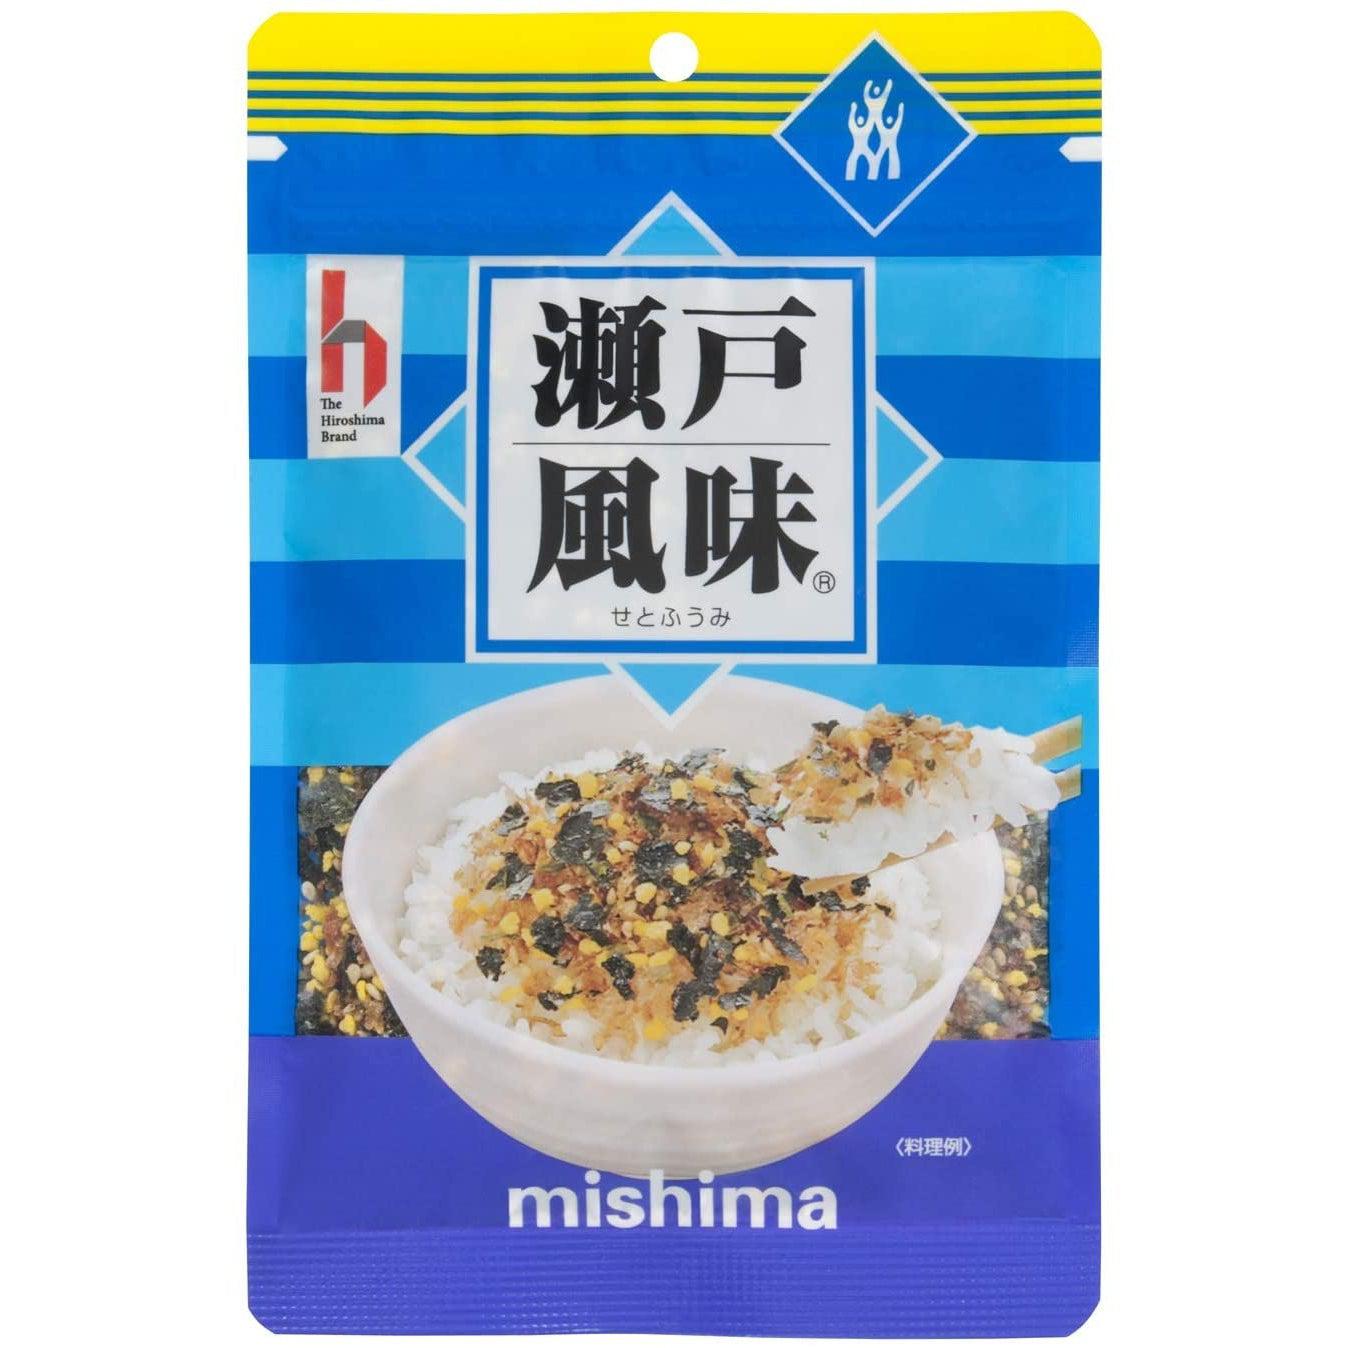 Mishima Seto Fumi Furikake Bonito Flake & Dried Egg Rice Seasoning 36g